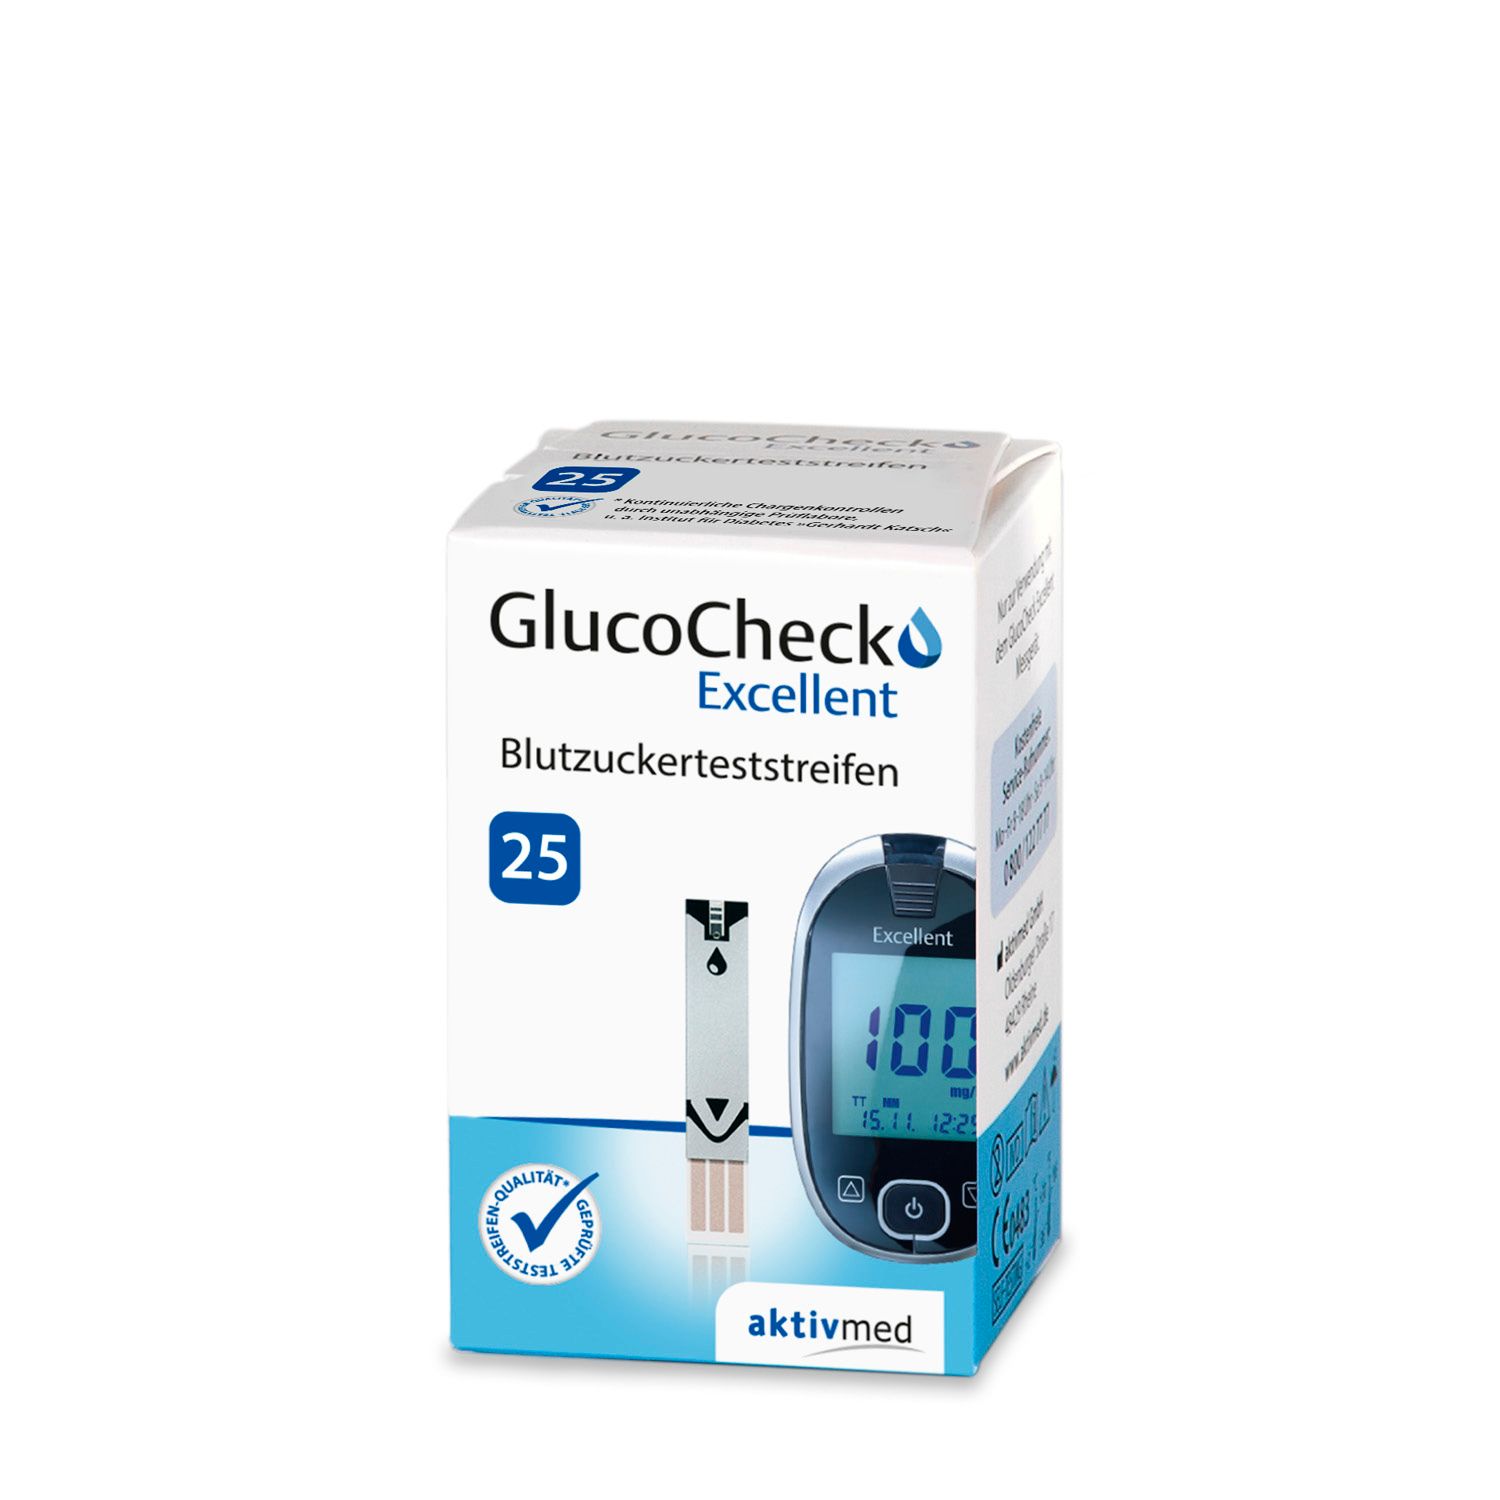 Glucocheck excellent test strips (25 pieces) for diabetes control